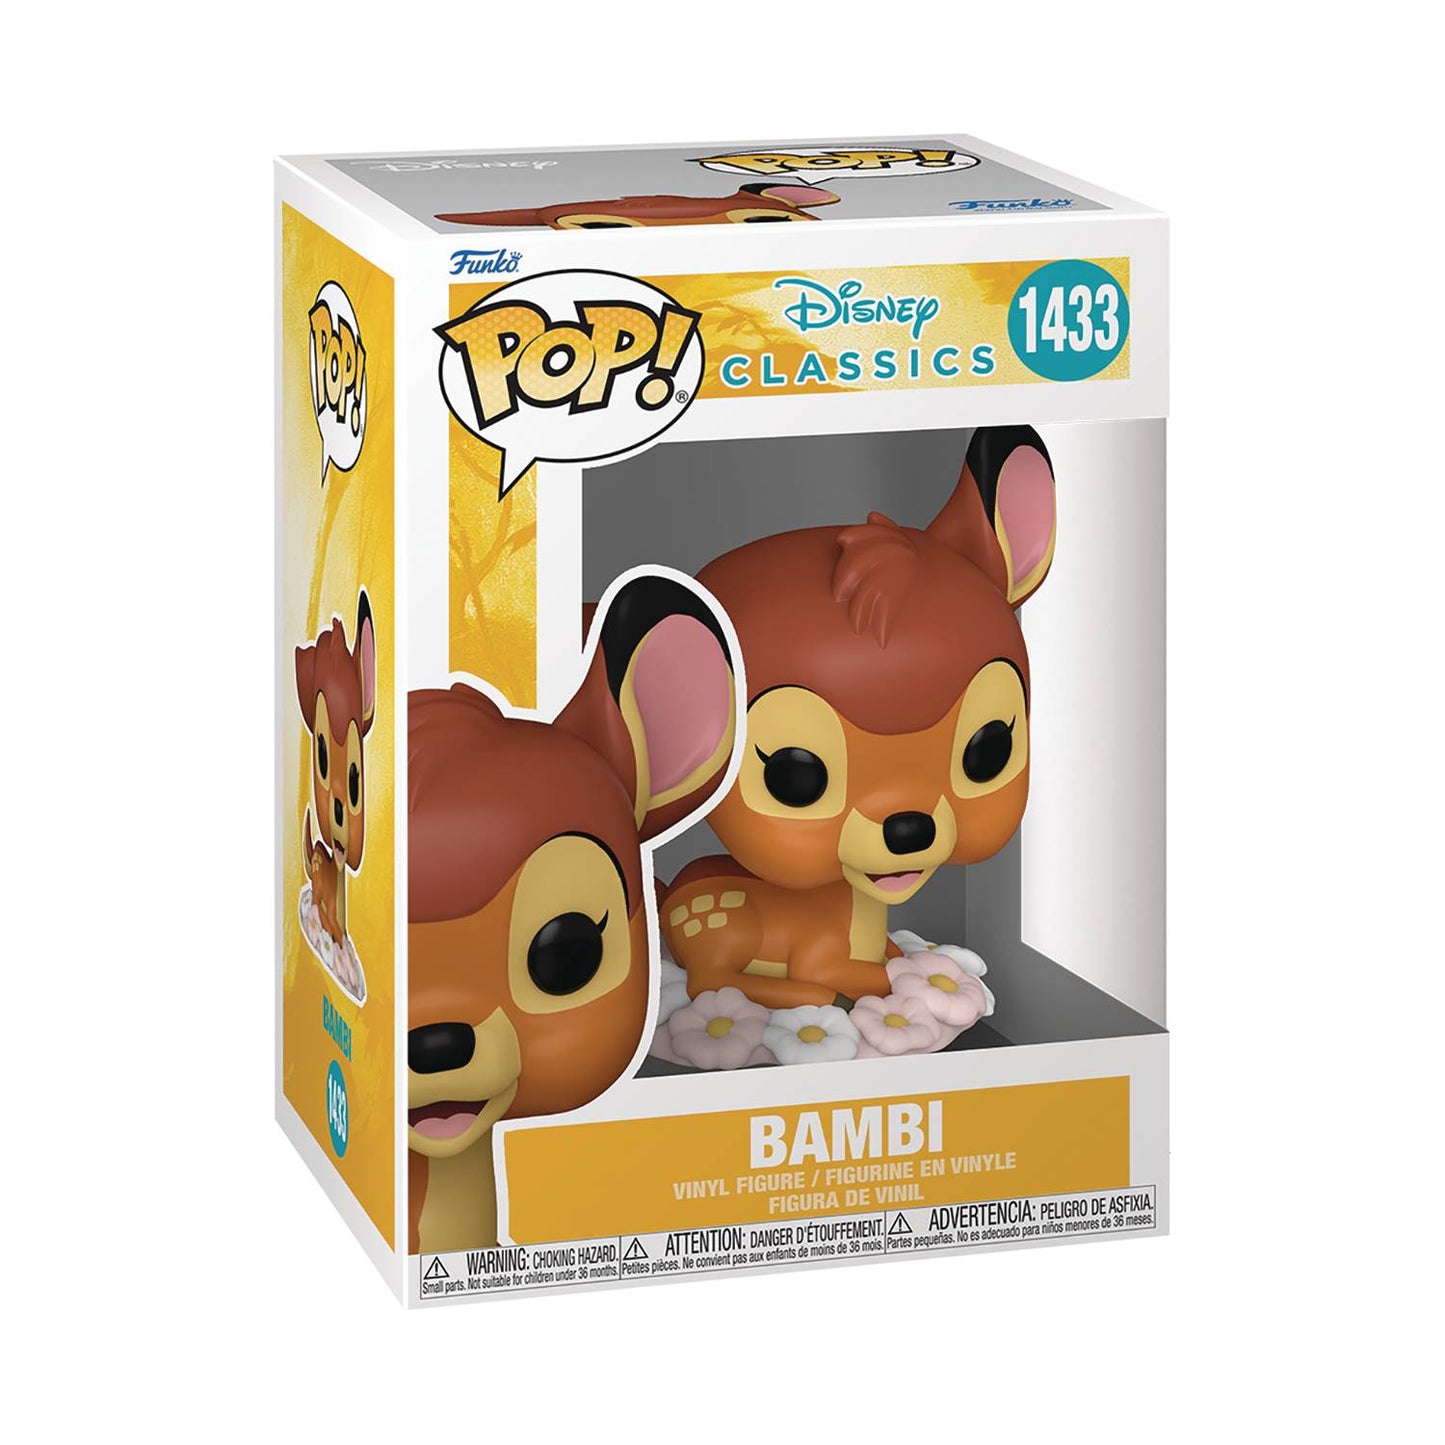 Funko Disney Classics Pop!: Bambi - Bambi #1433